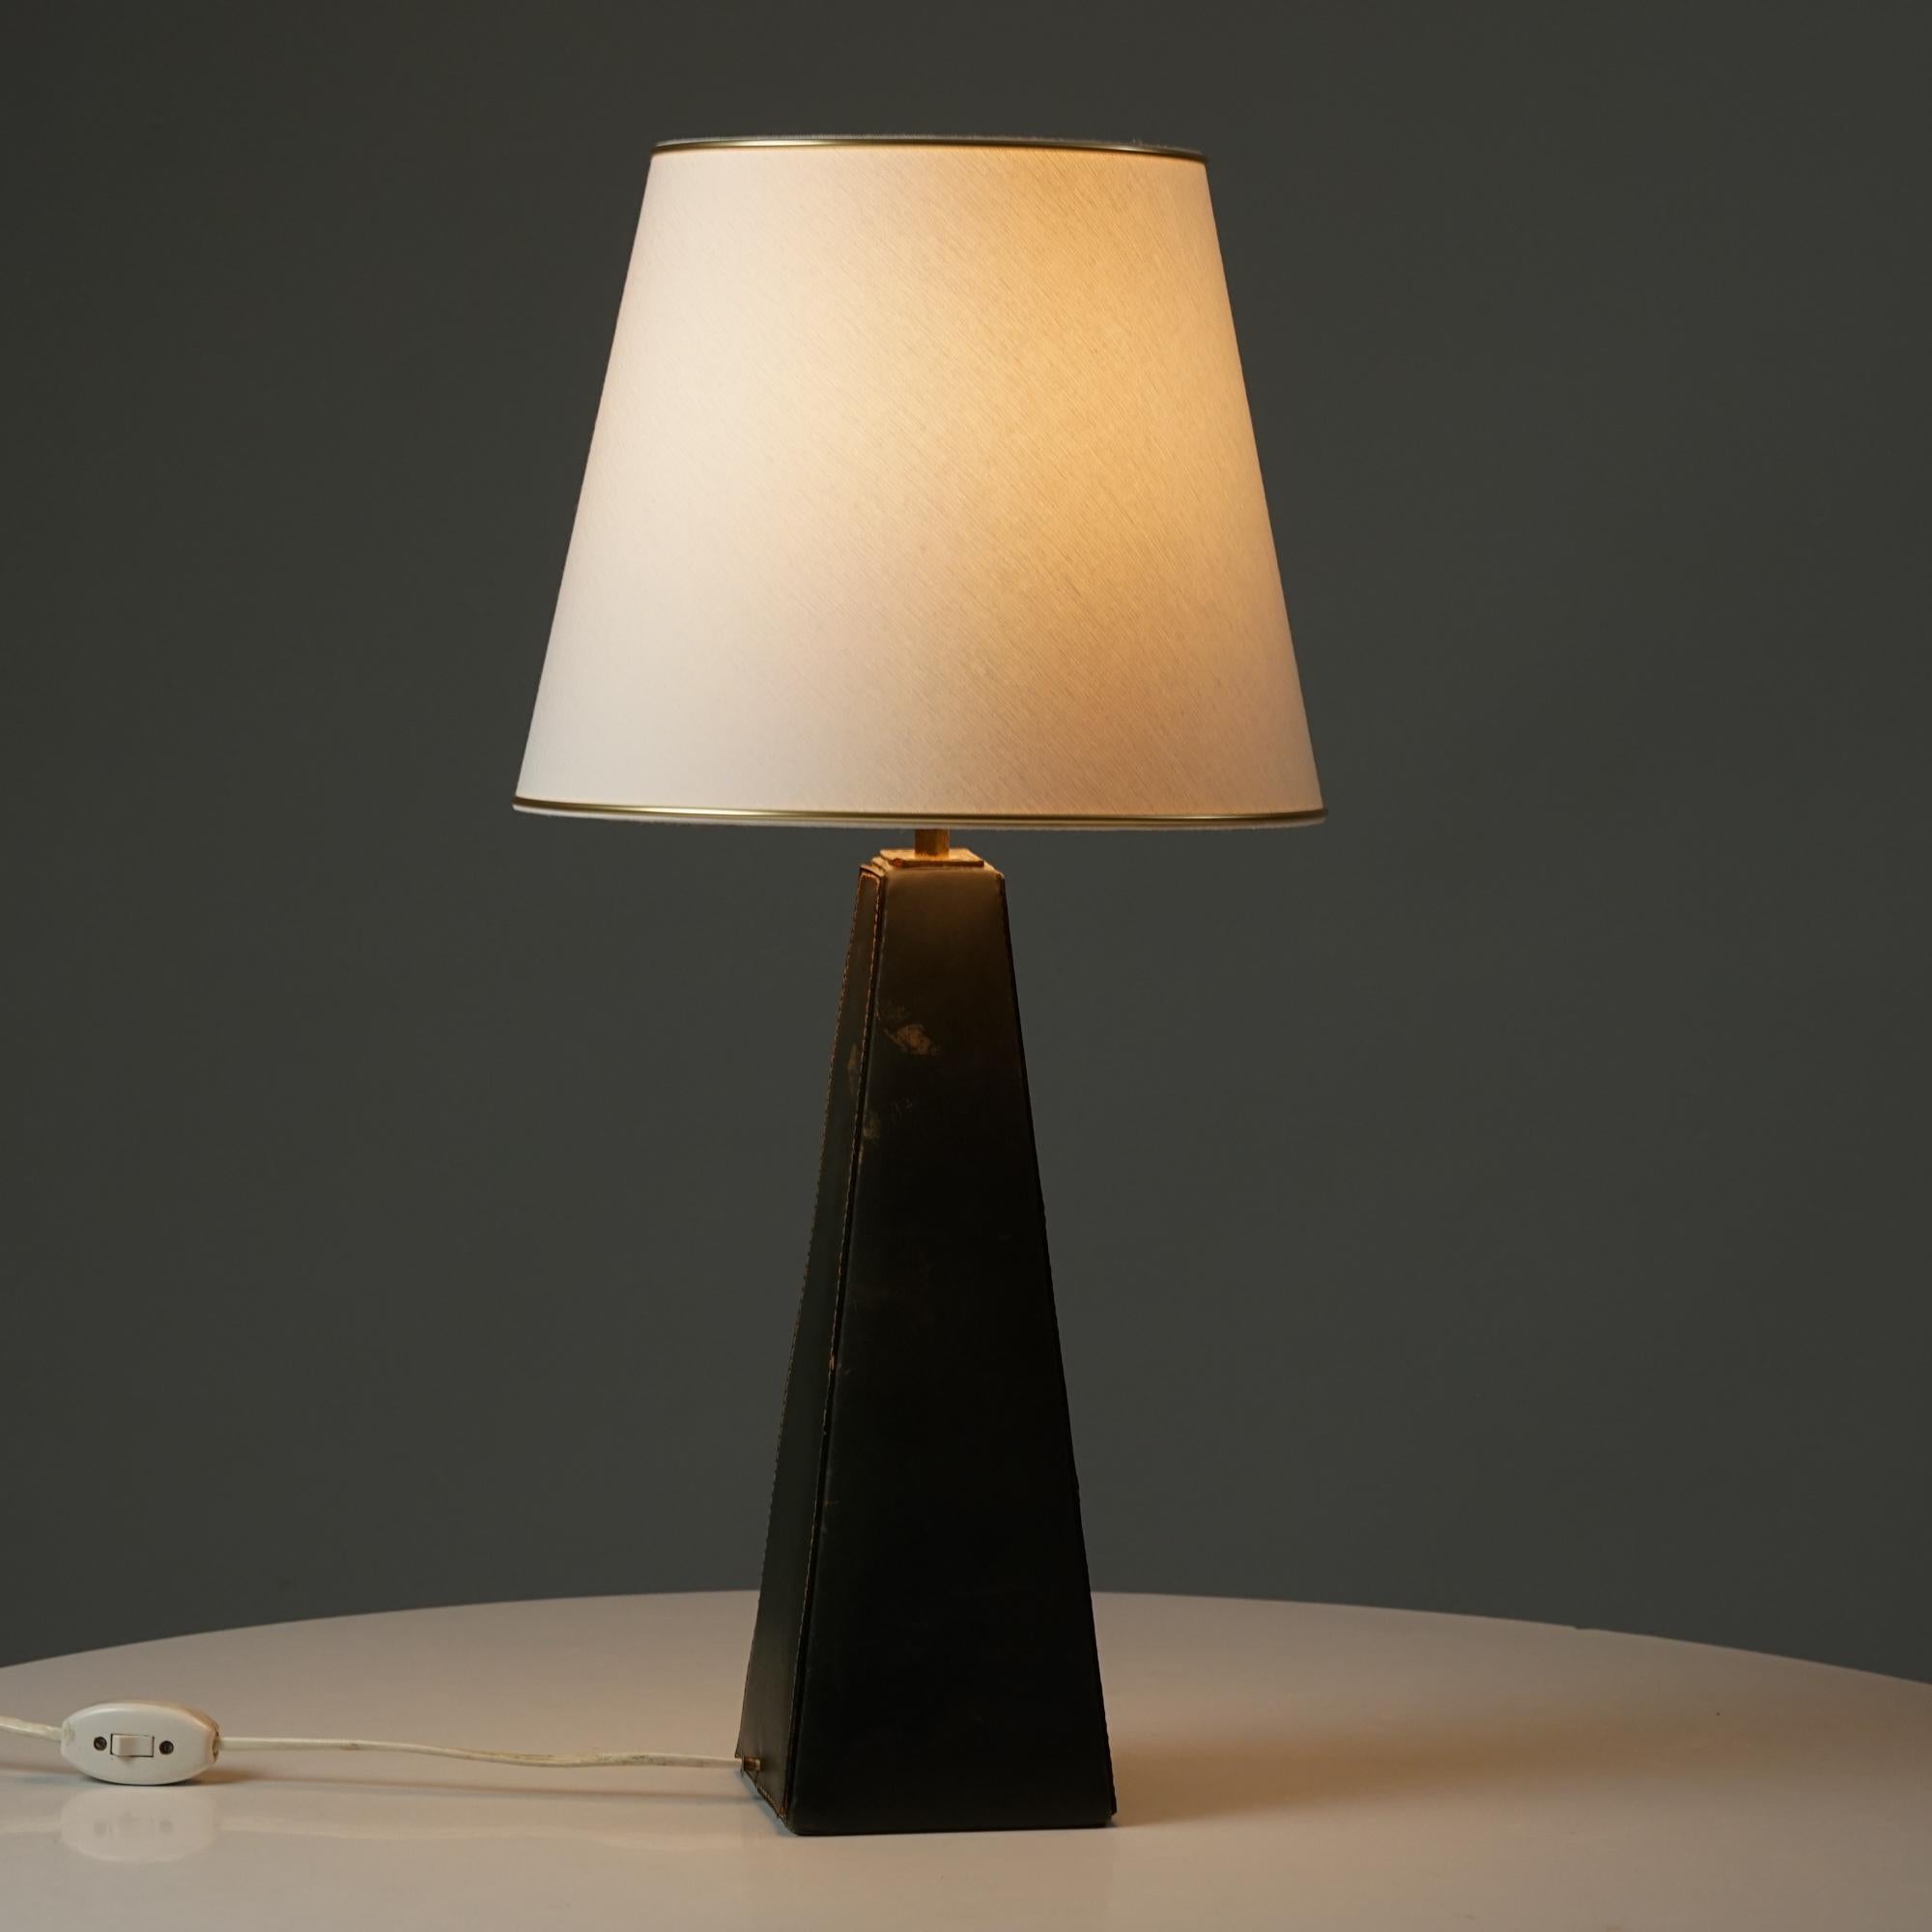 Scandinavian Modern Lisa Johansson-Pape Rare Leather Table Lamp, Orno Oy, 1960s For Sale